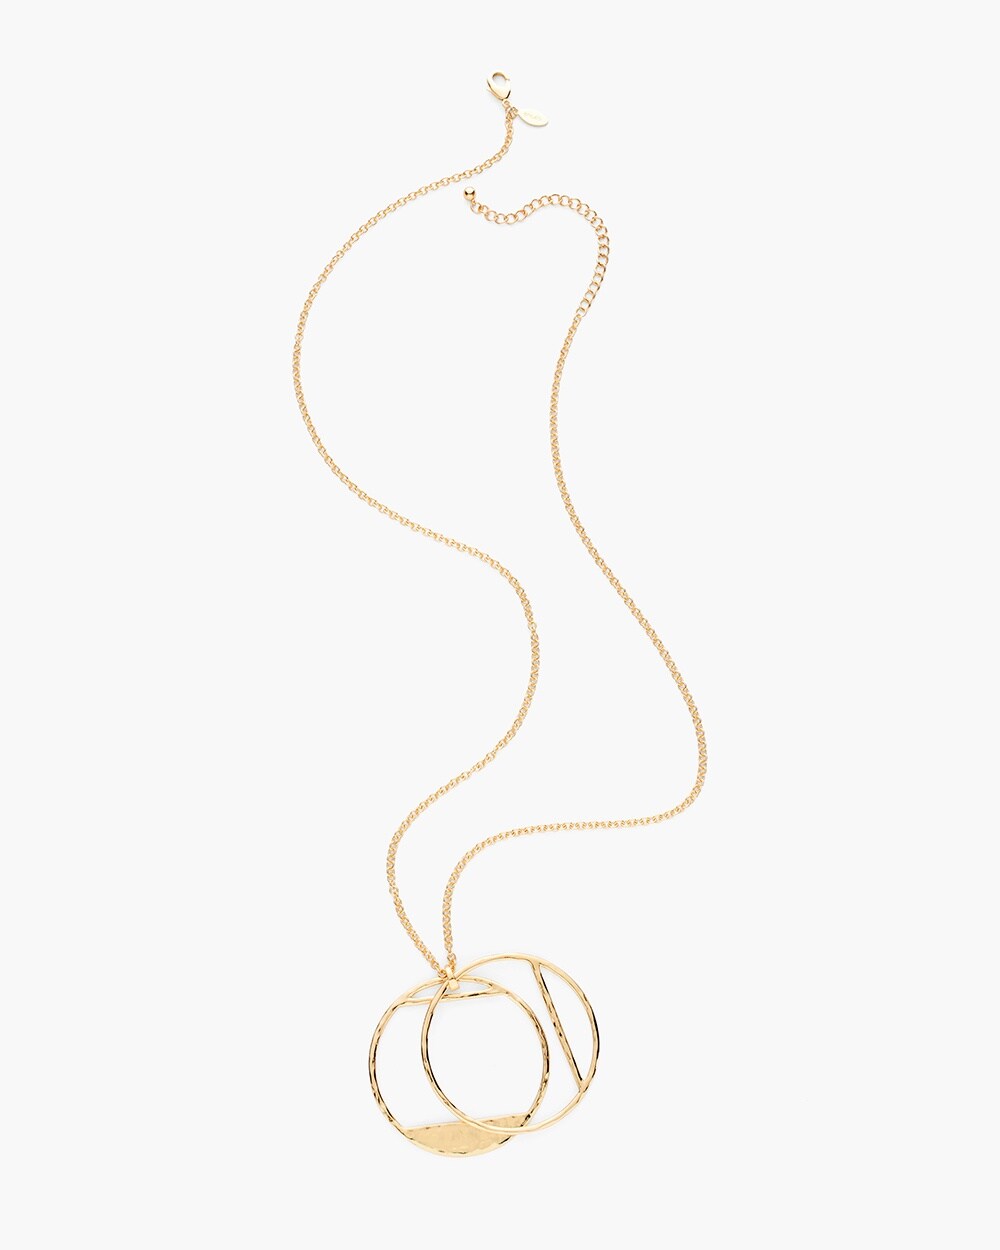 Faelyn Long Pendant Necklace